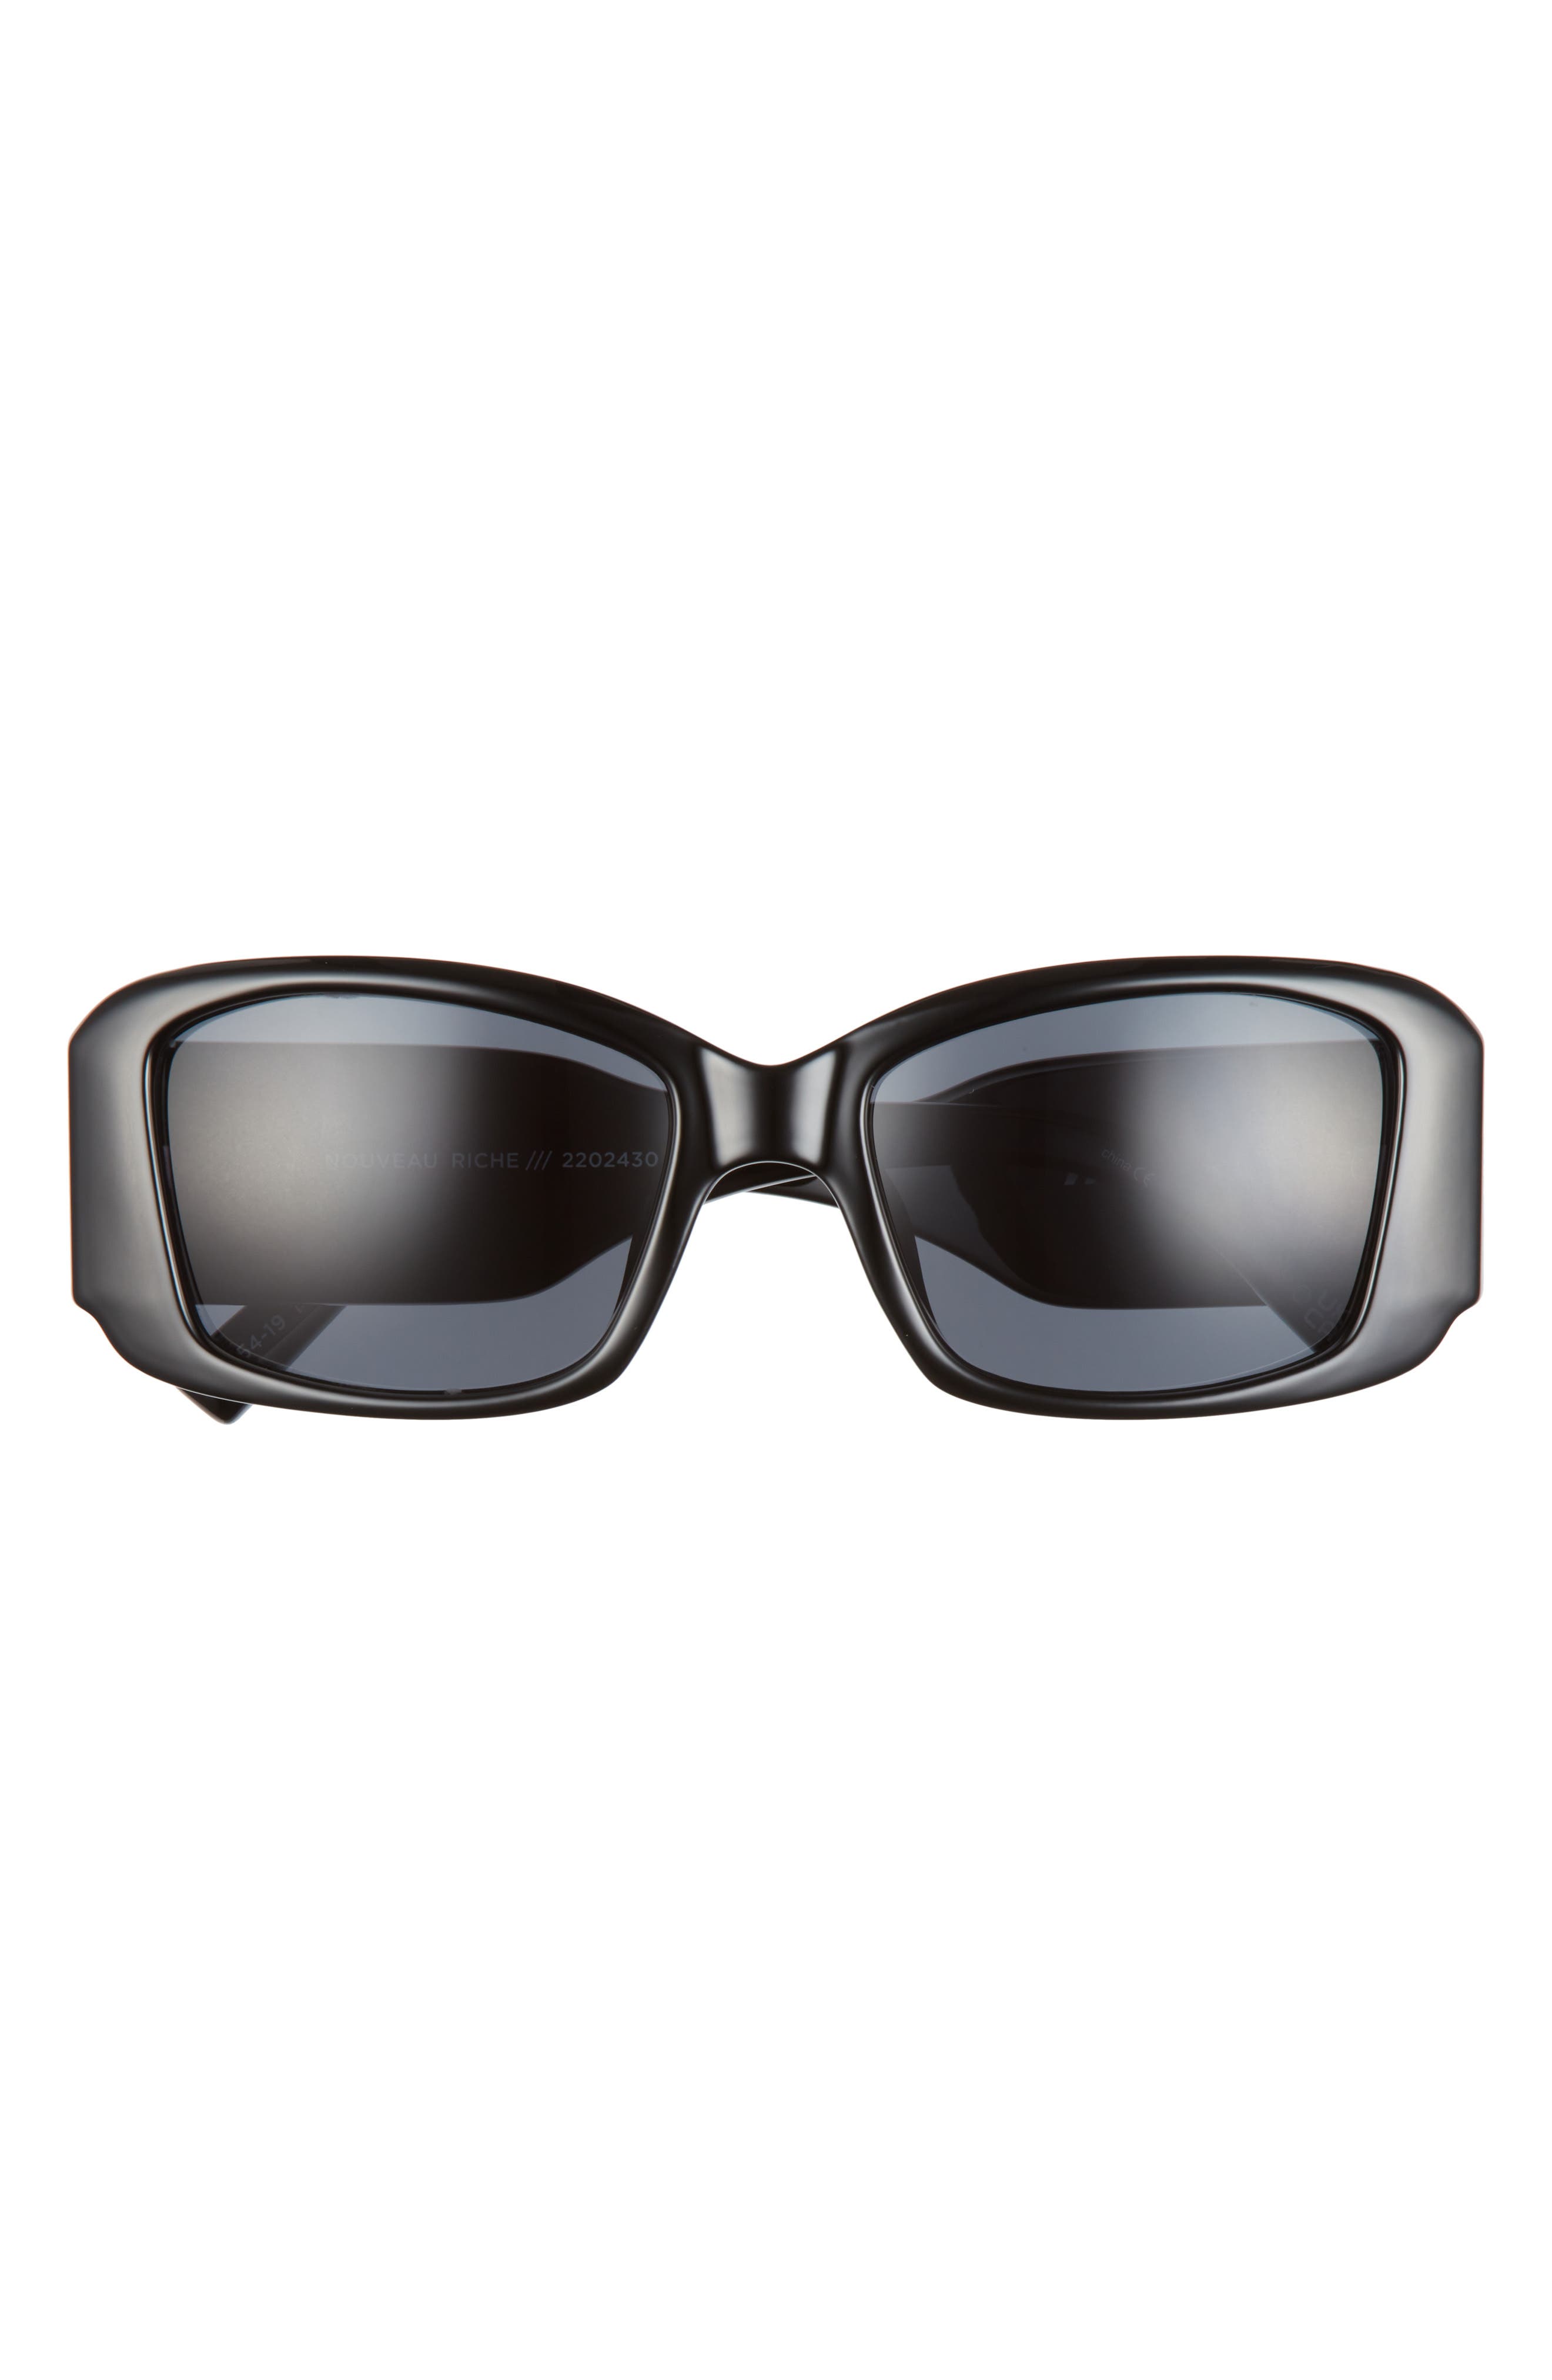 Le Specs Nouveau Riche 54mm Rectangular Sunglasses in Black/Smoke Mono at Nordstrom